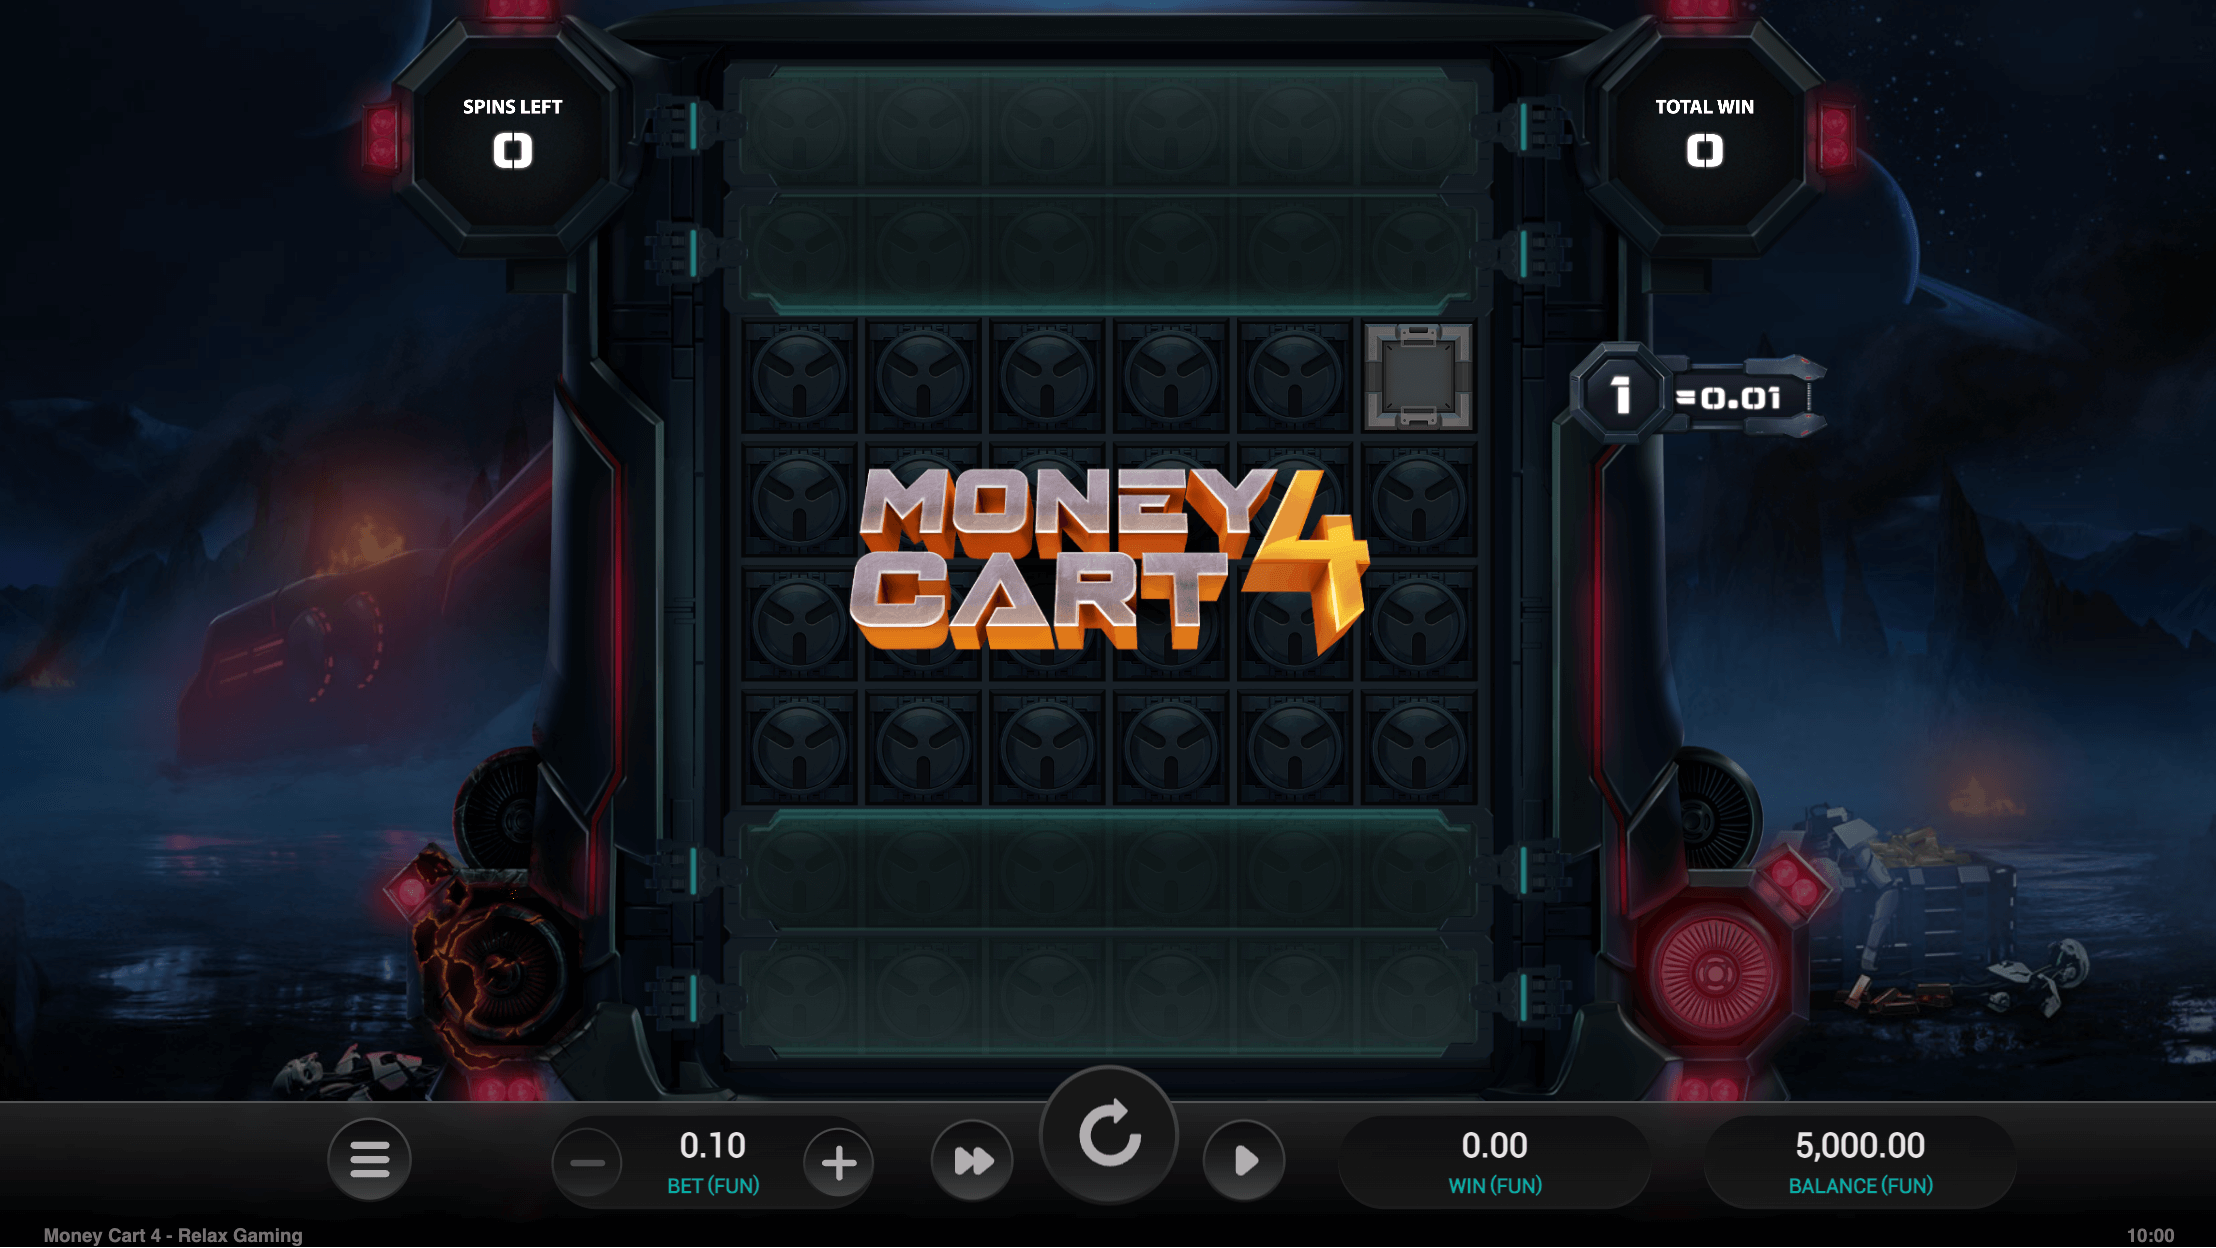 Money Cart 4 Relaxgaming Joker slot